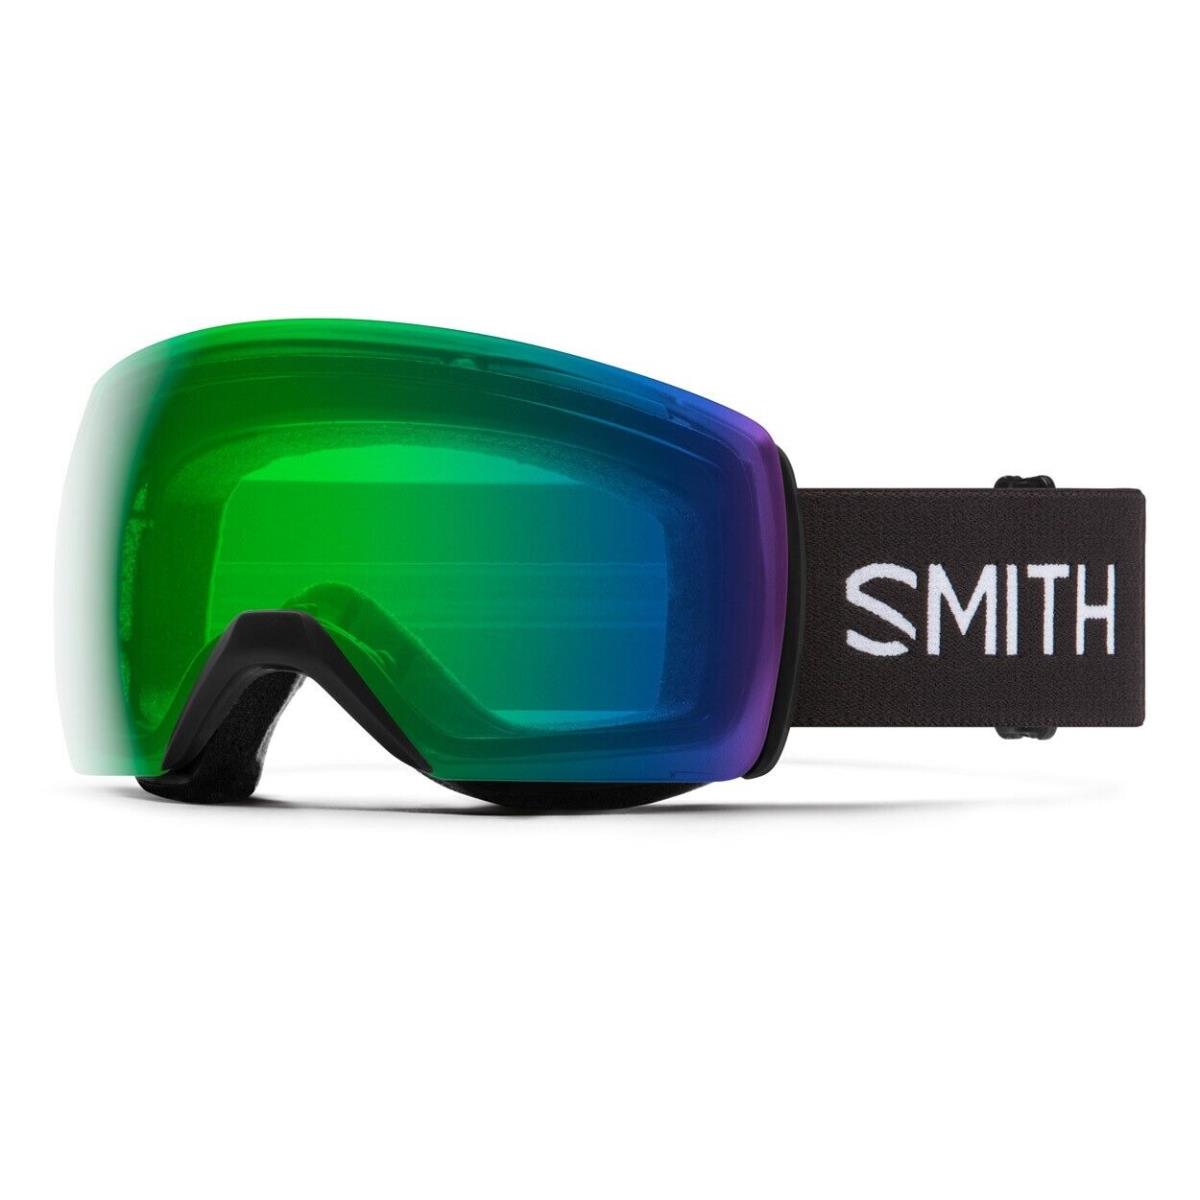 Smith Skyline XL Snow Goggles Black Frame Chromapop Everyday Green Mirror Lens - Black, Green